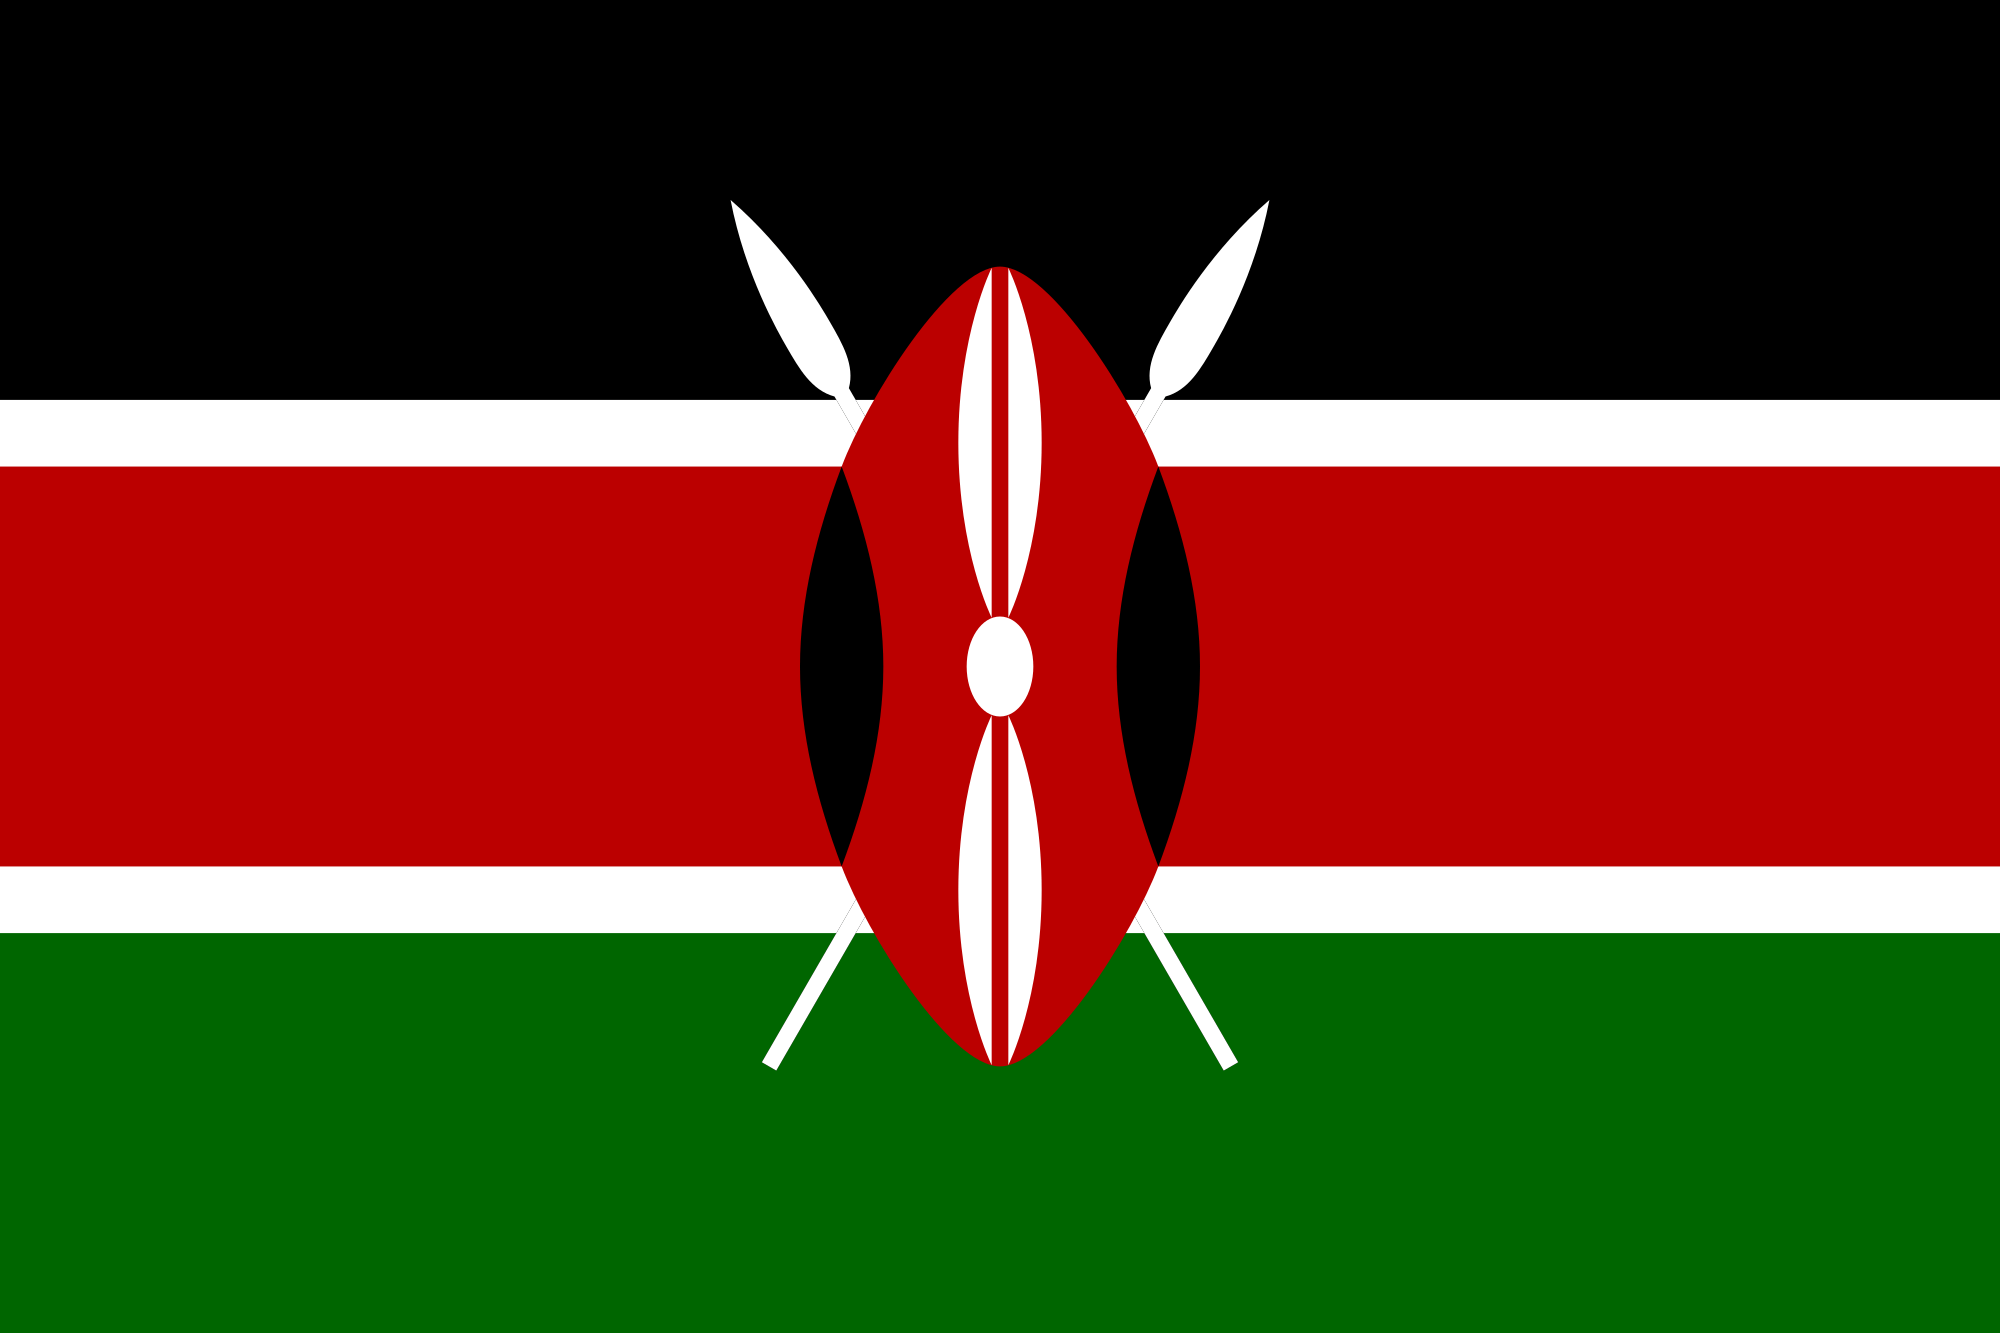 Black Red and Green Logo - Kenya Flag - Symbolism of Colors, Flag Etiquette, Design and History